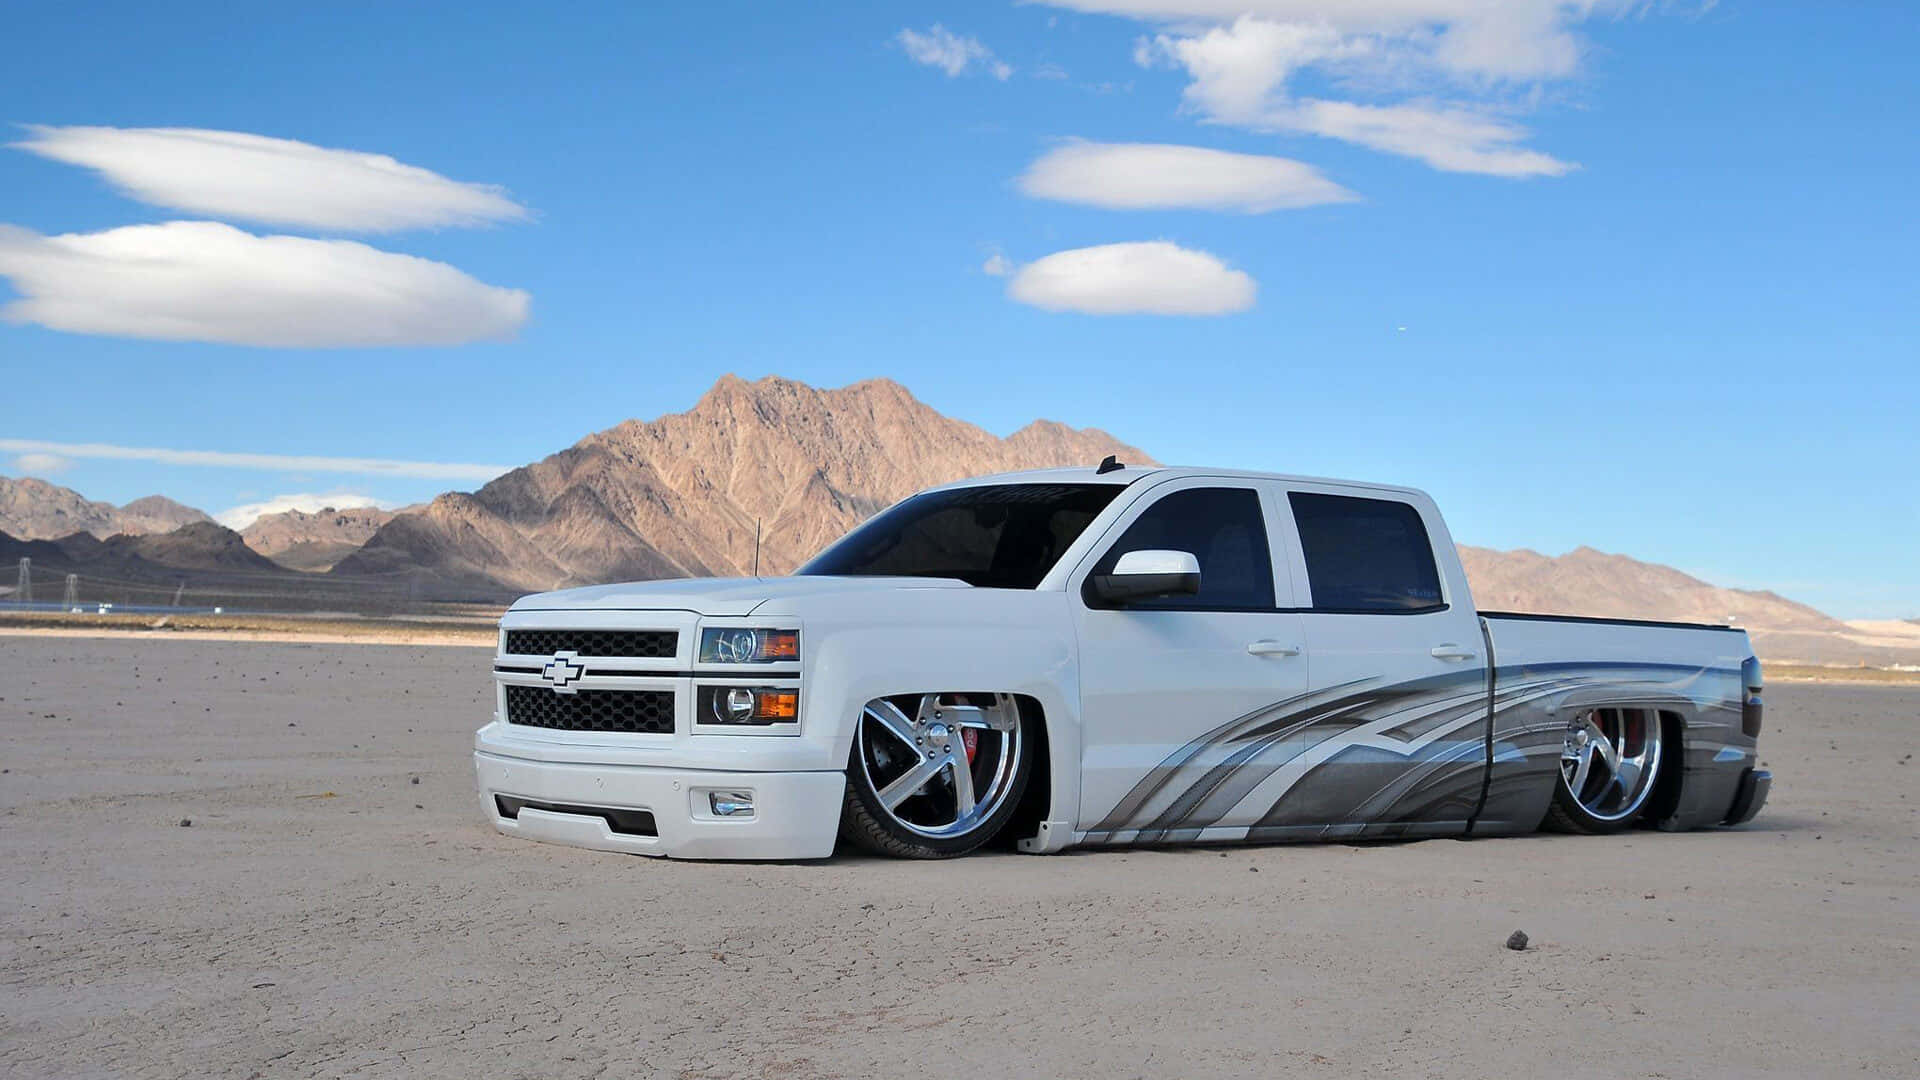 Custom Lowered Chevrolet Silverado Desert Backdrop.jpg Wallpaper